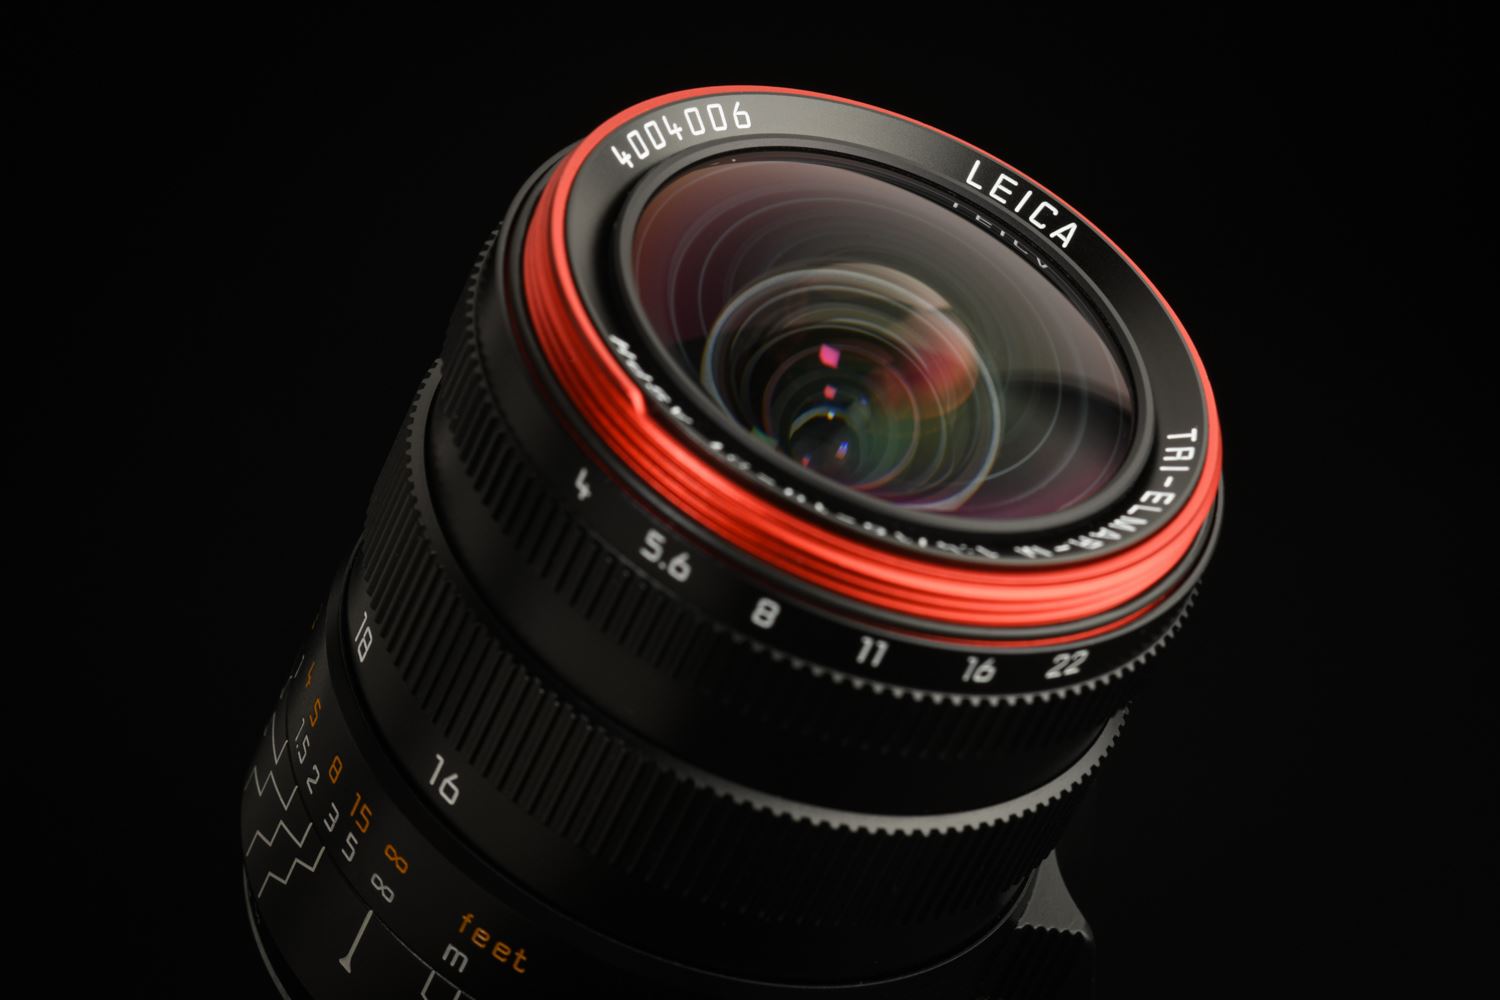 Picture of Leica WATE Tri-Elmar-M 16-18-21mm f/4 ASPH